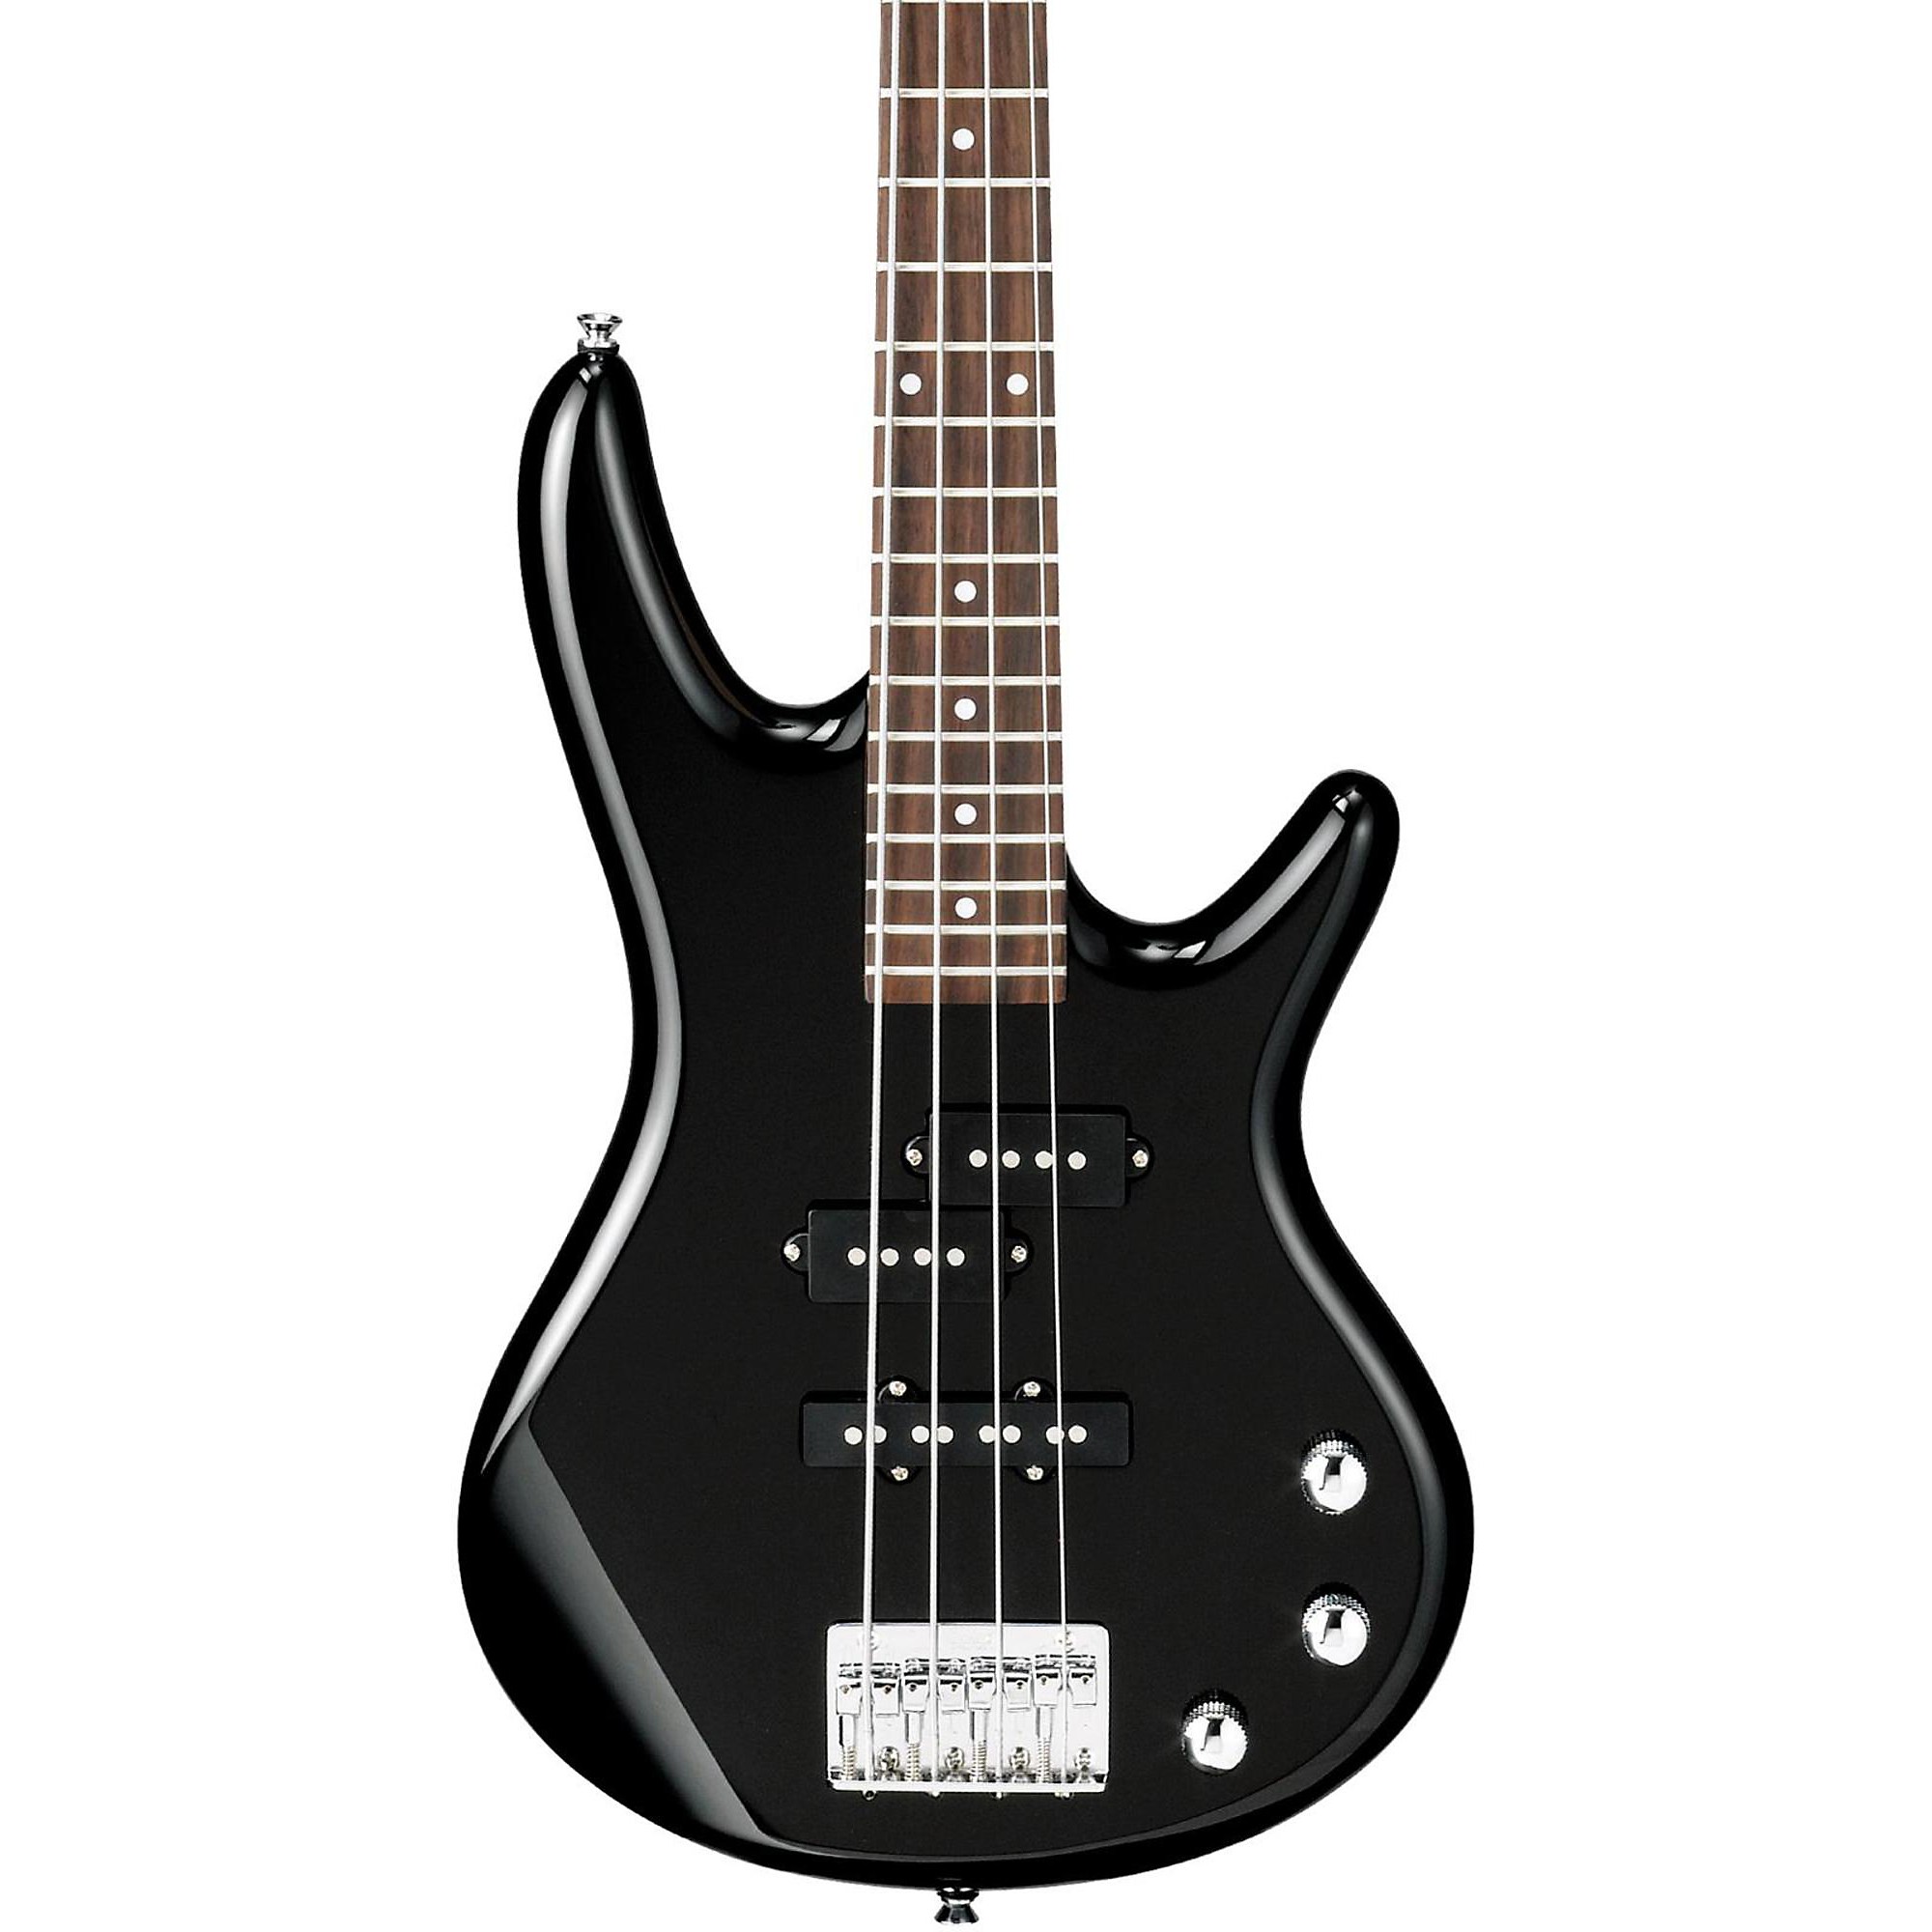 Ibanez GSRM20 miKro Бас-гитара с короткой мензурой, черная цена и фото